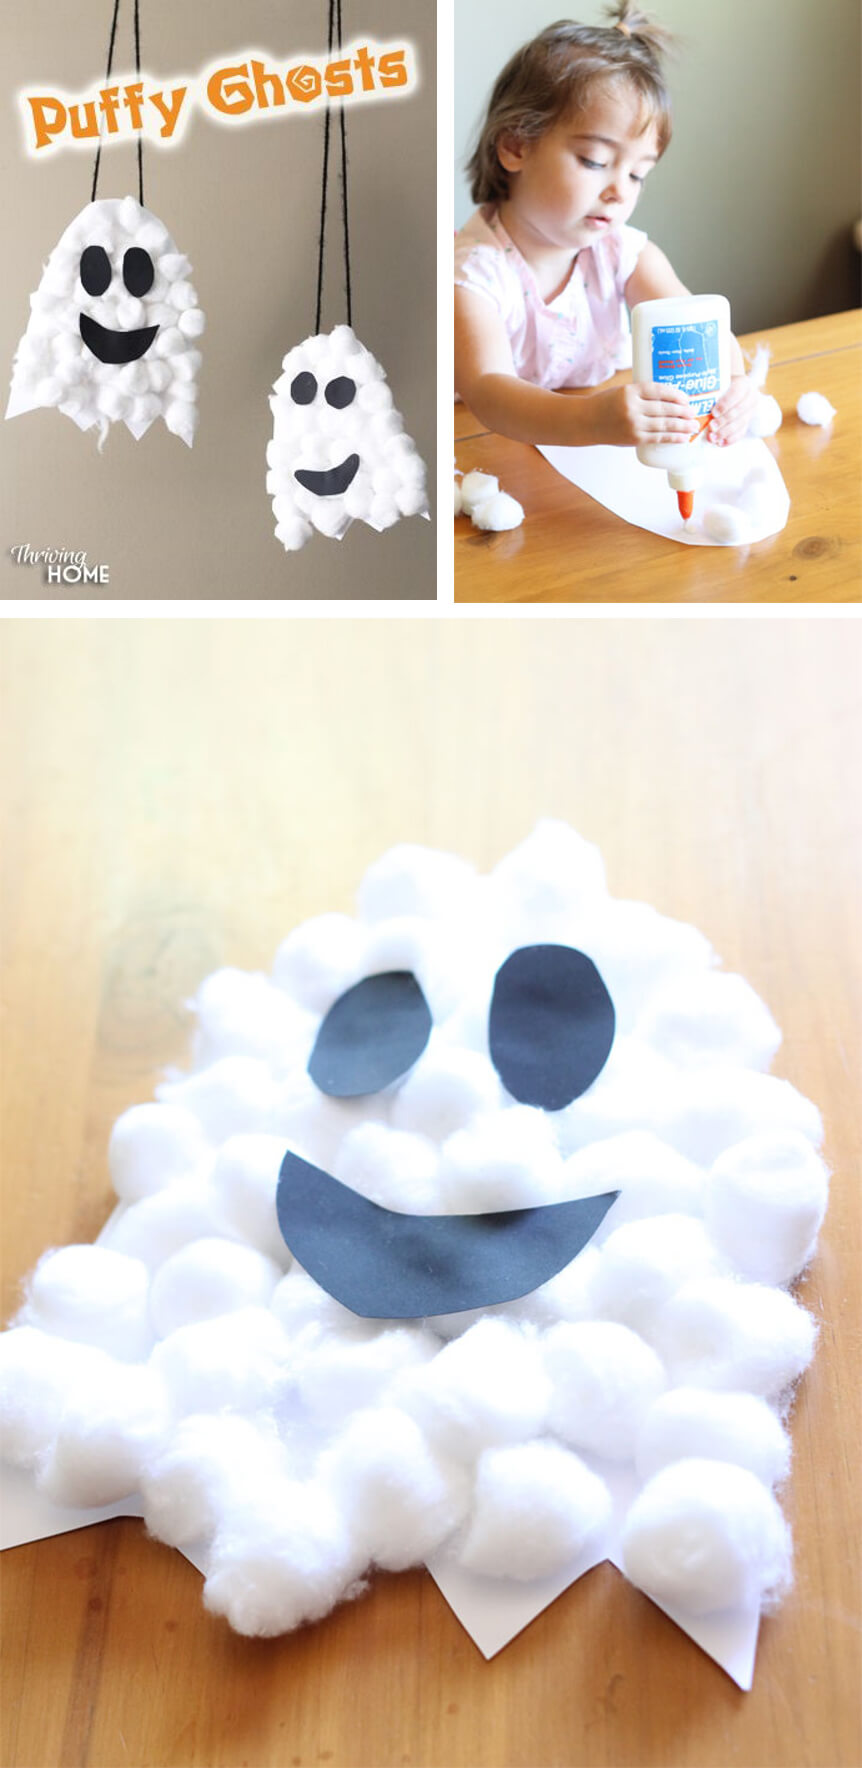 Friendly Cotton Ball Halloween Crafts | Fun & Creative DIY Halloween Crafts for Kids